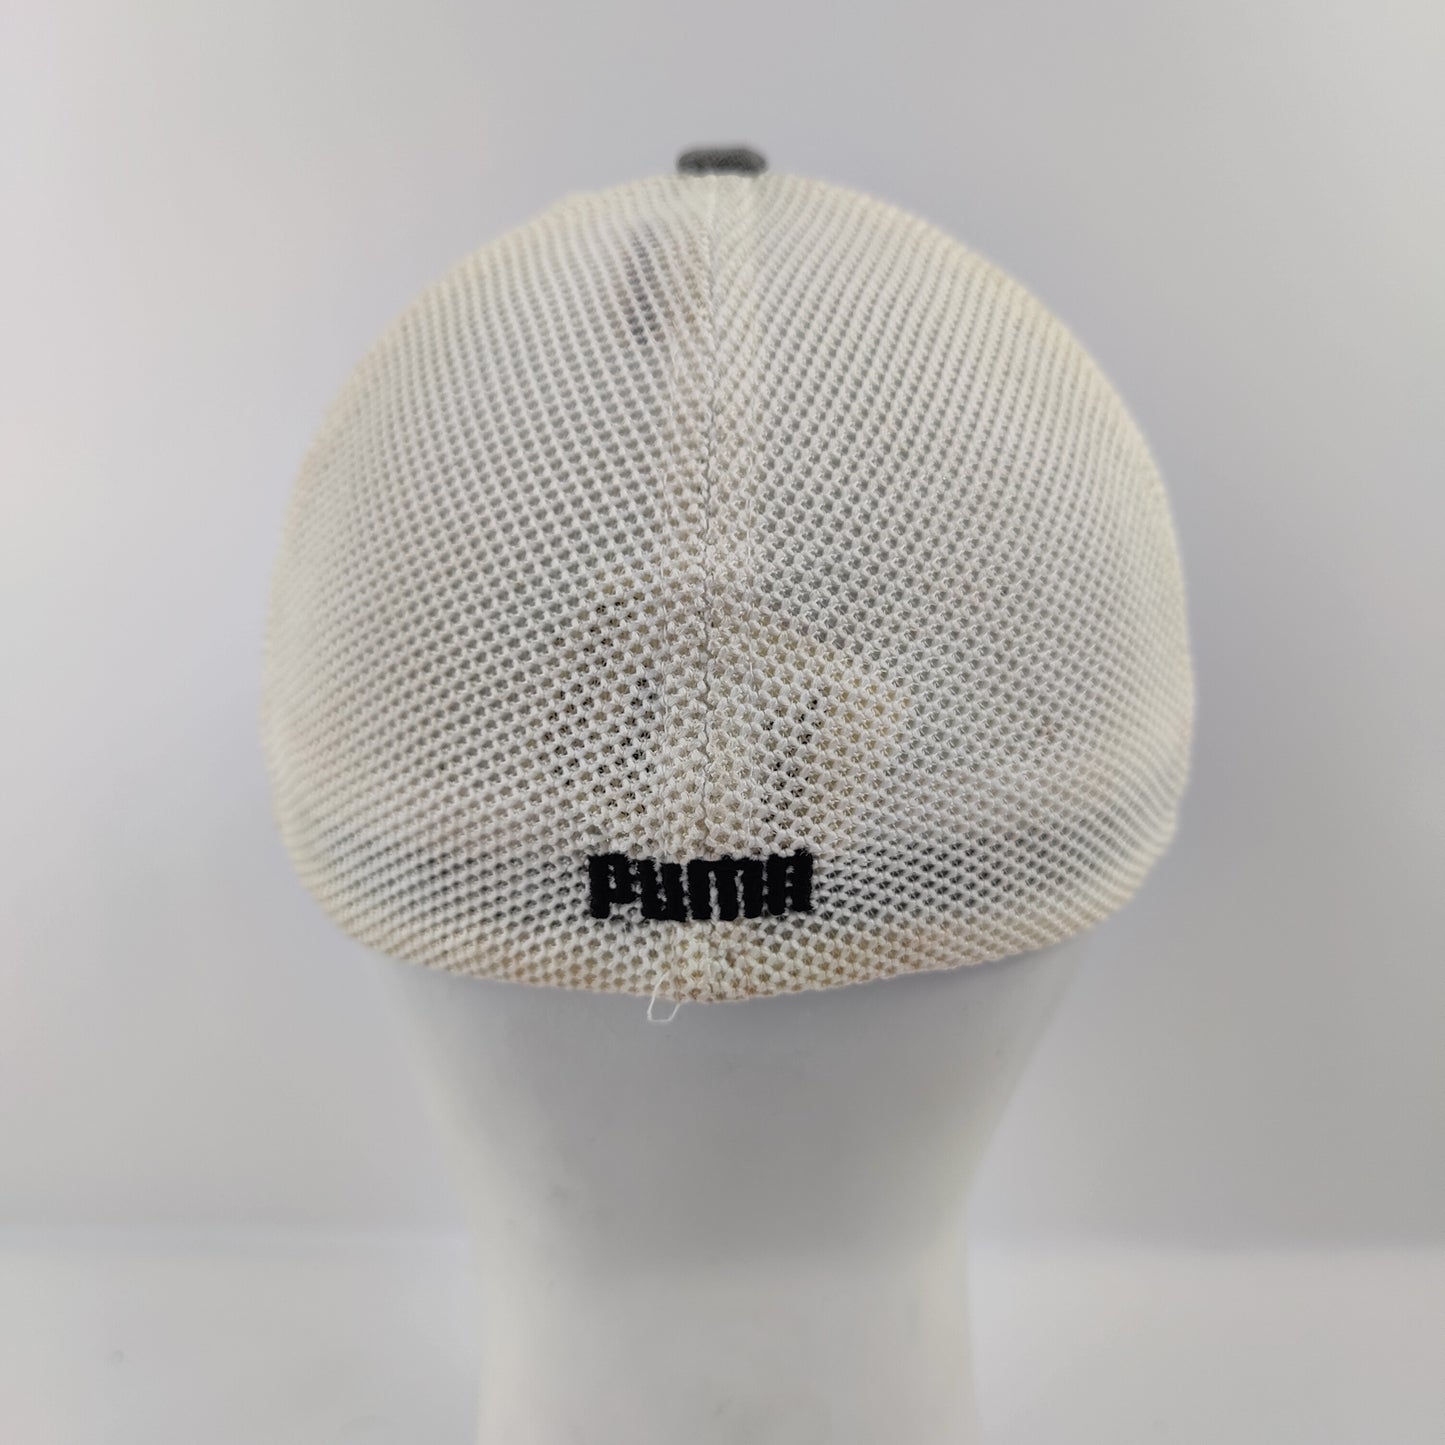 Puma Unisex Baseball Cap - Grey - 1091